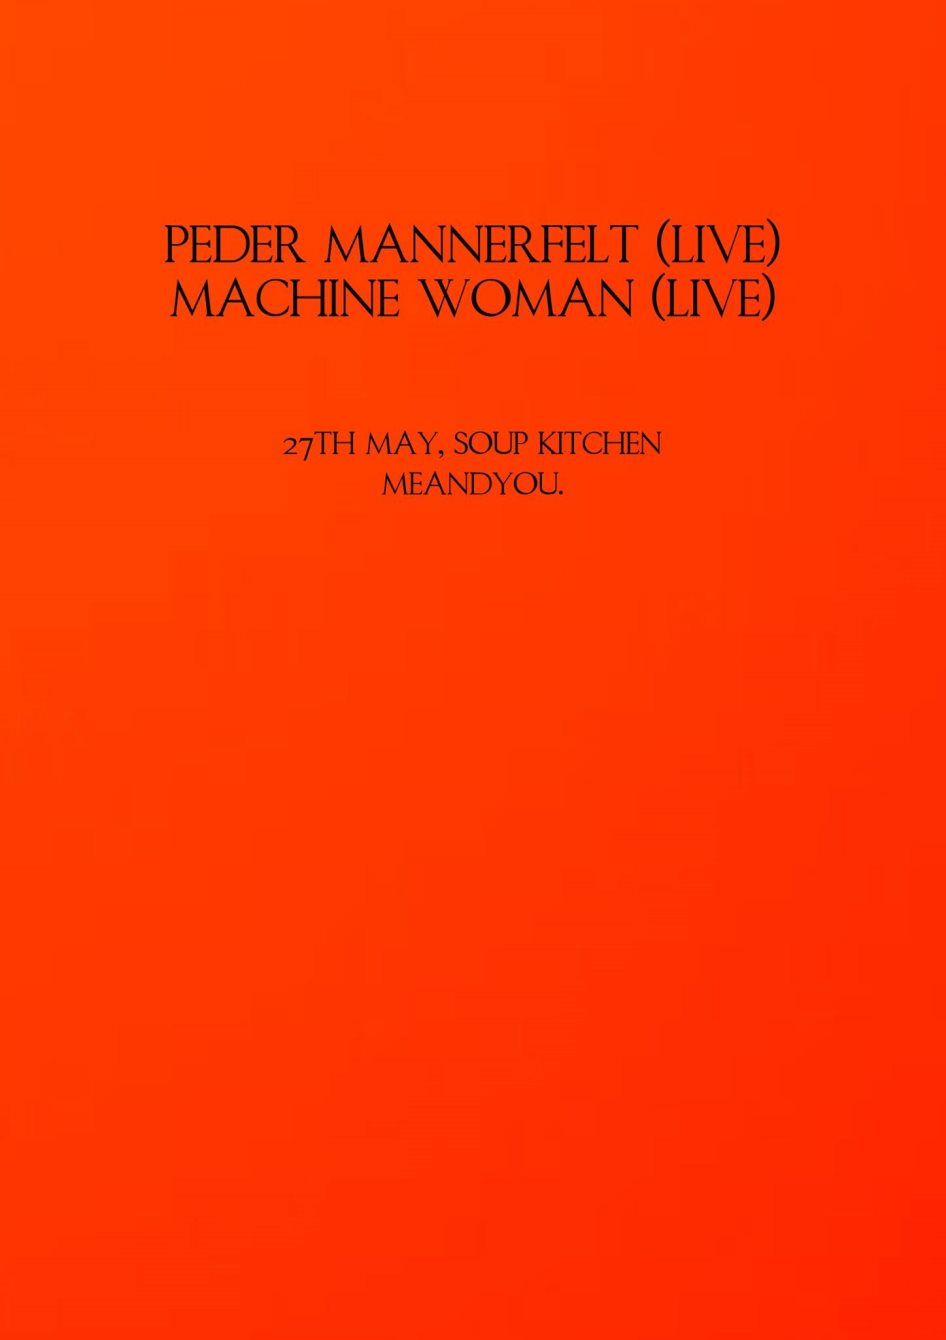 Peder Mannerfelt Live and Machine Woman Live - Flyer front